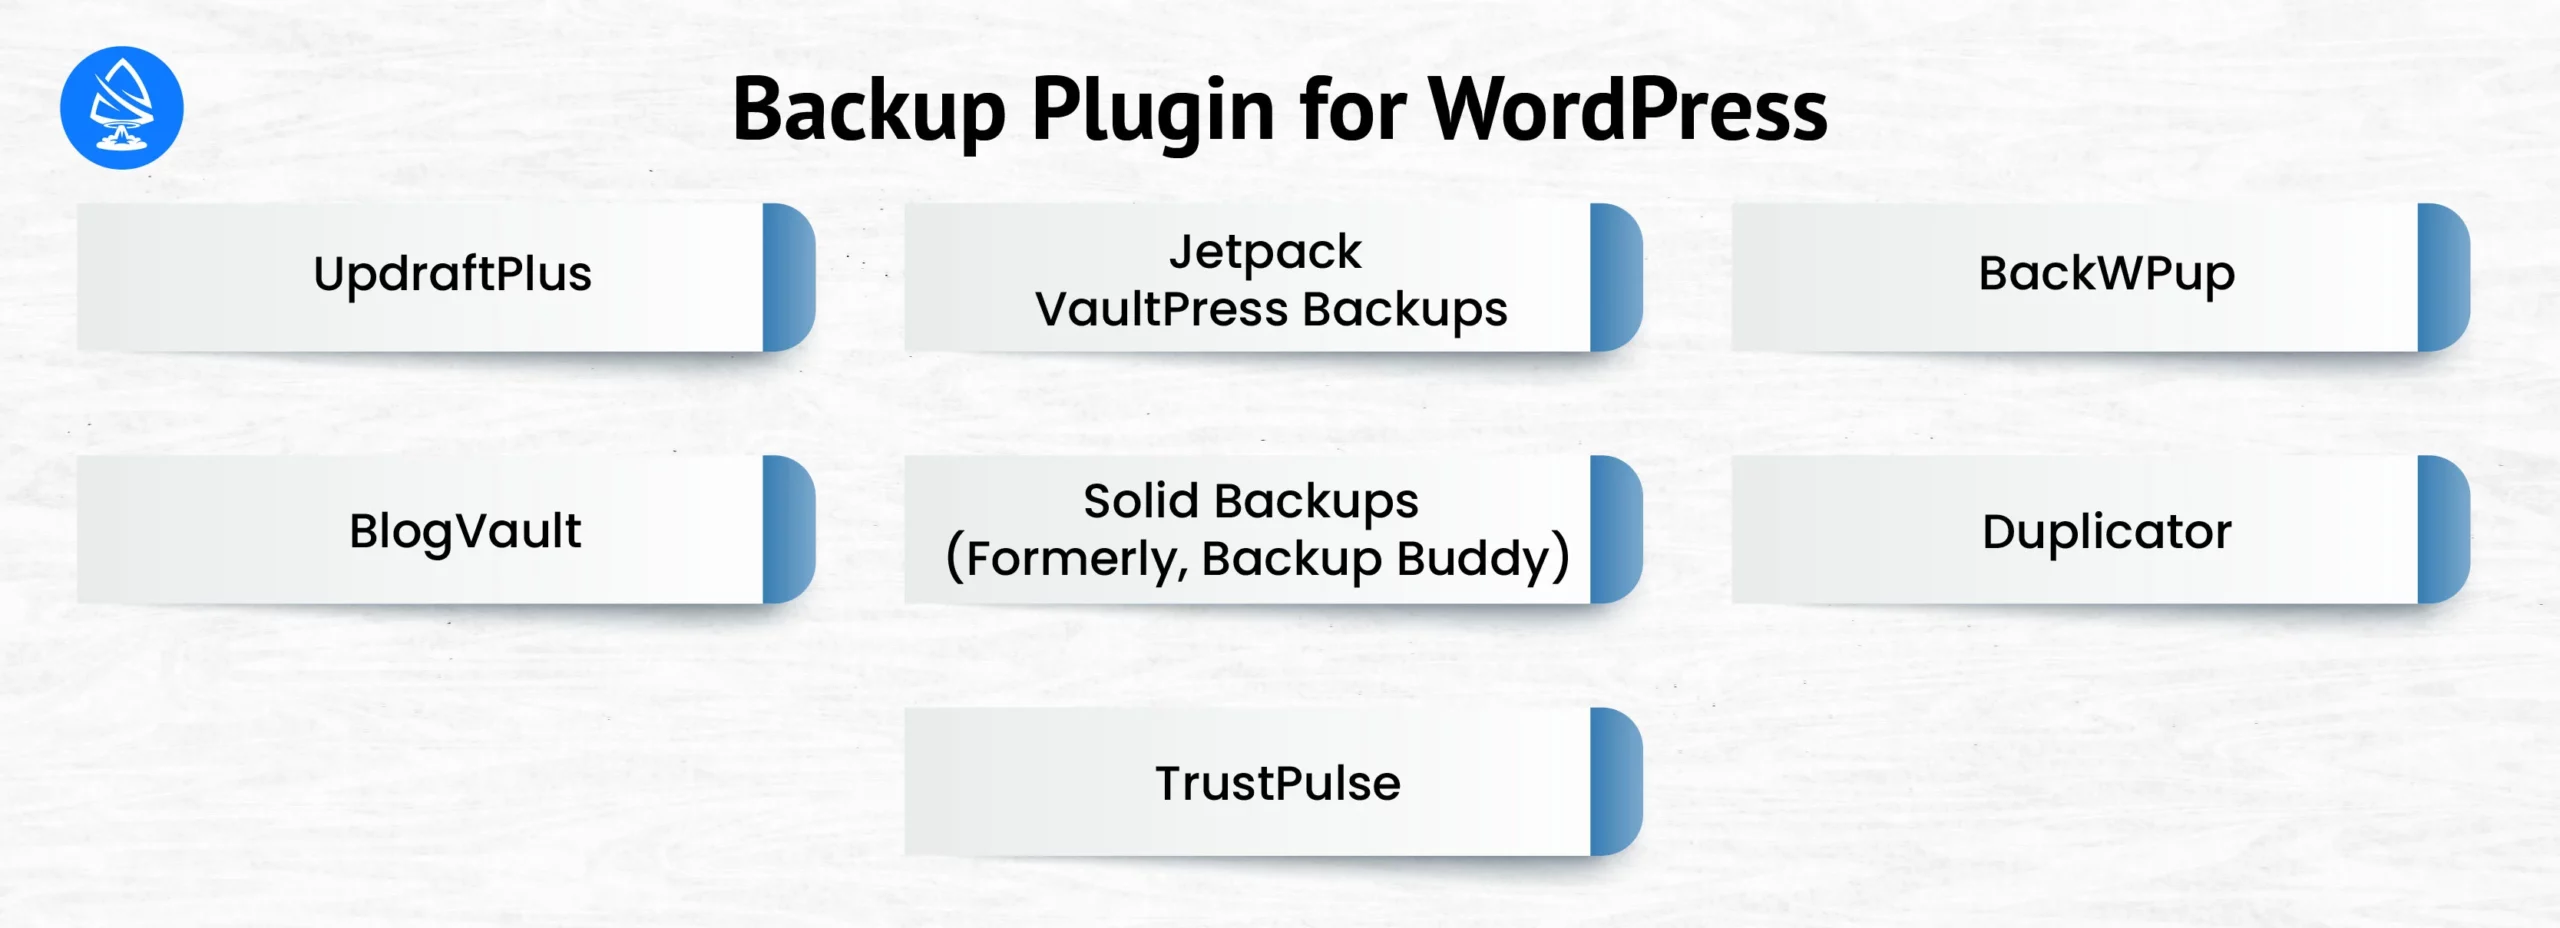 Backup Plugin for WordPress